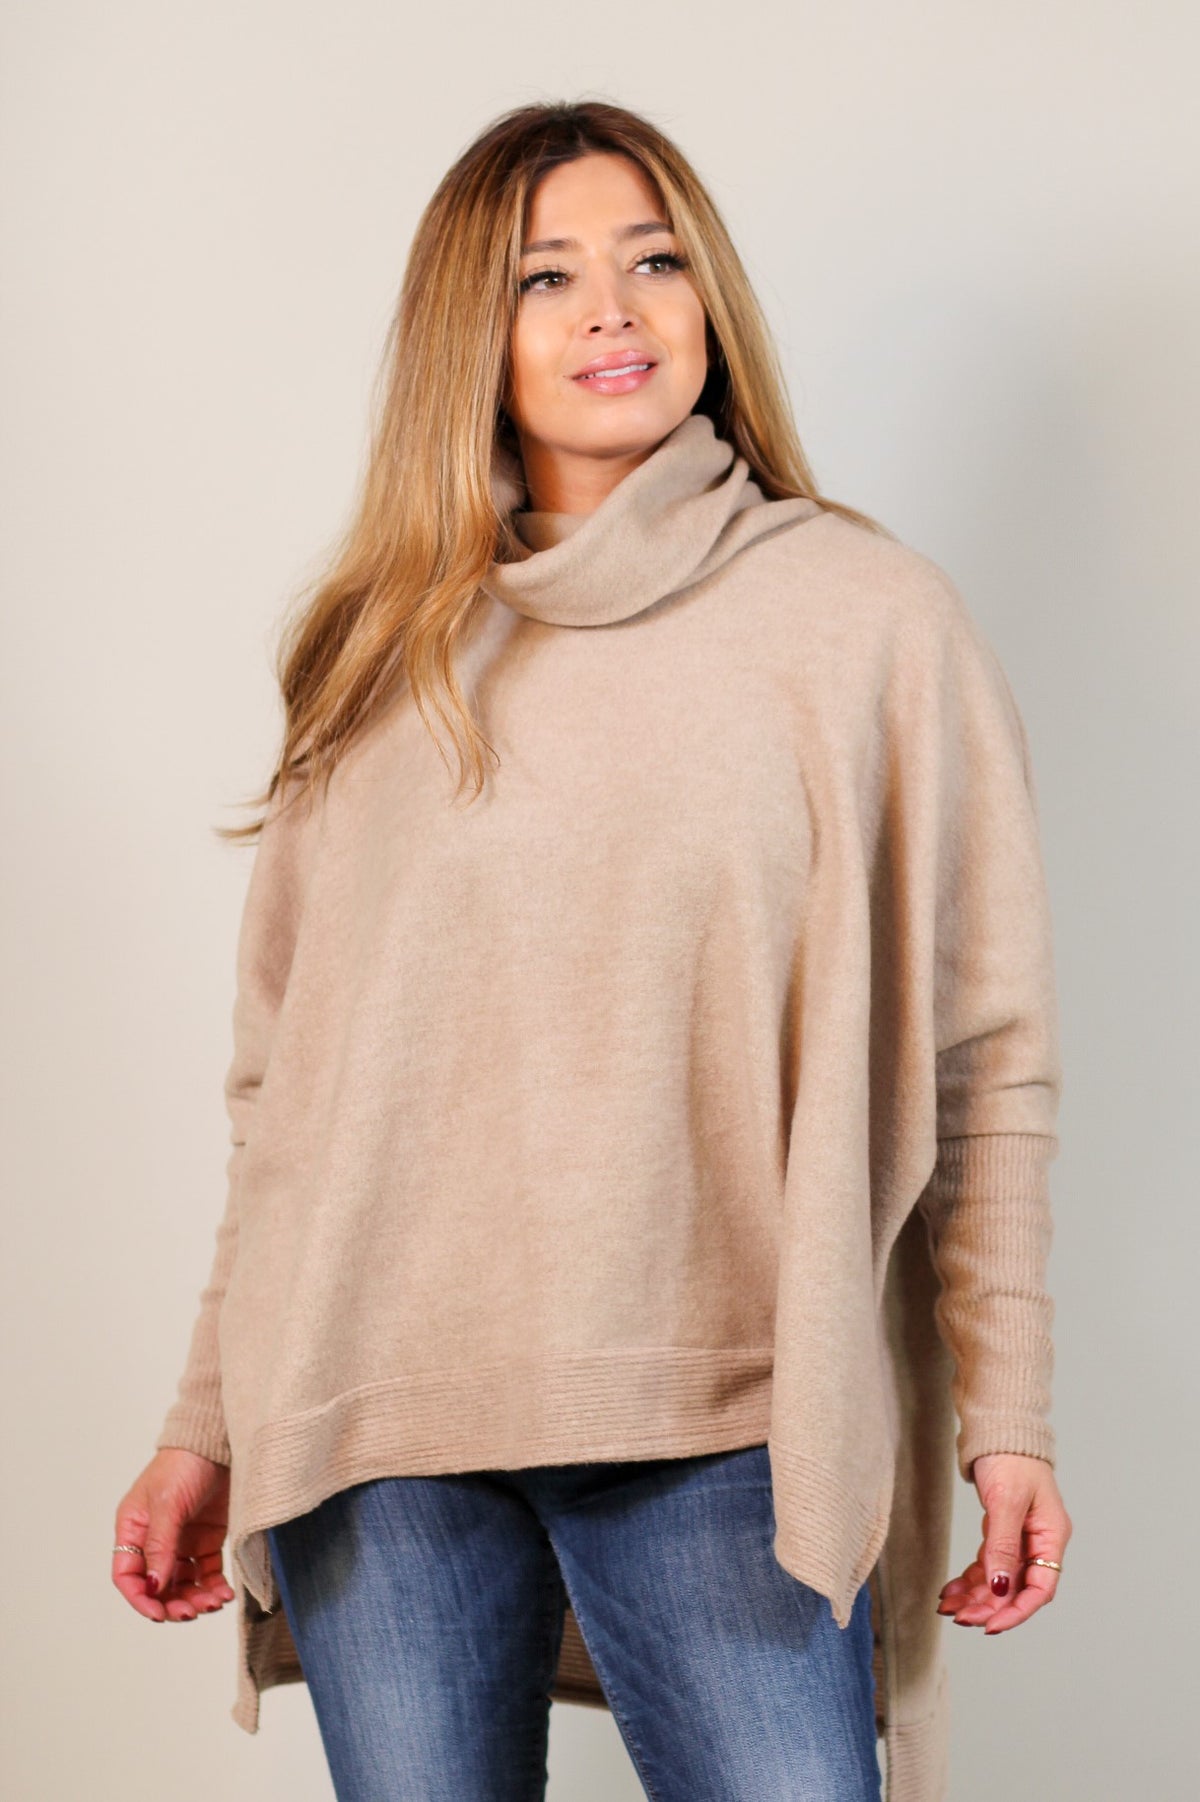 Cowl Turtleneck Sweater Top